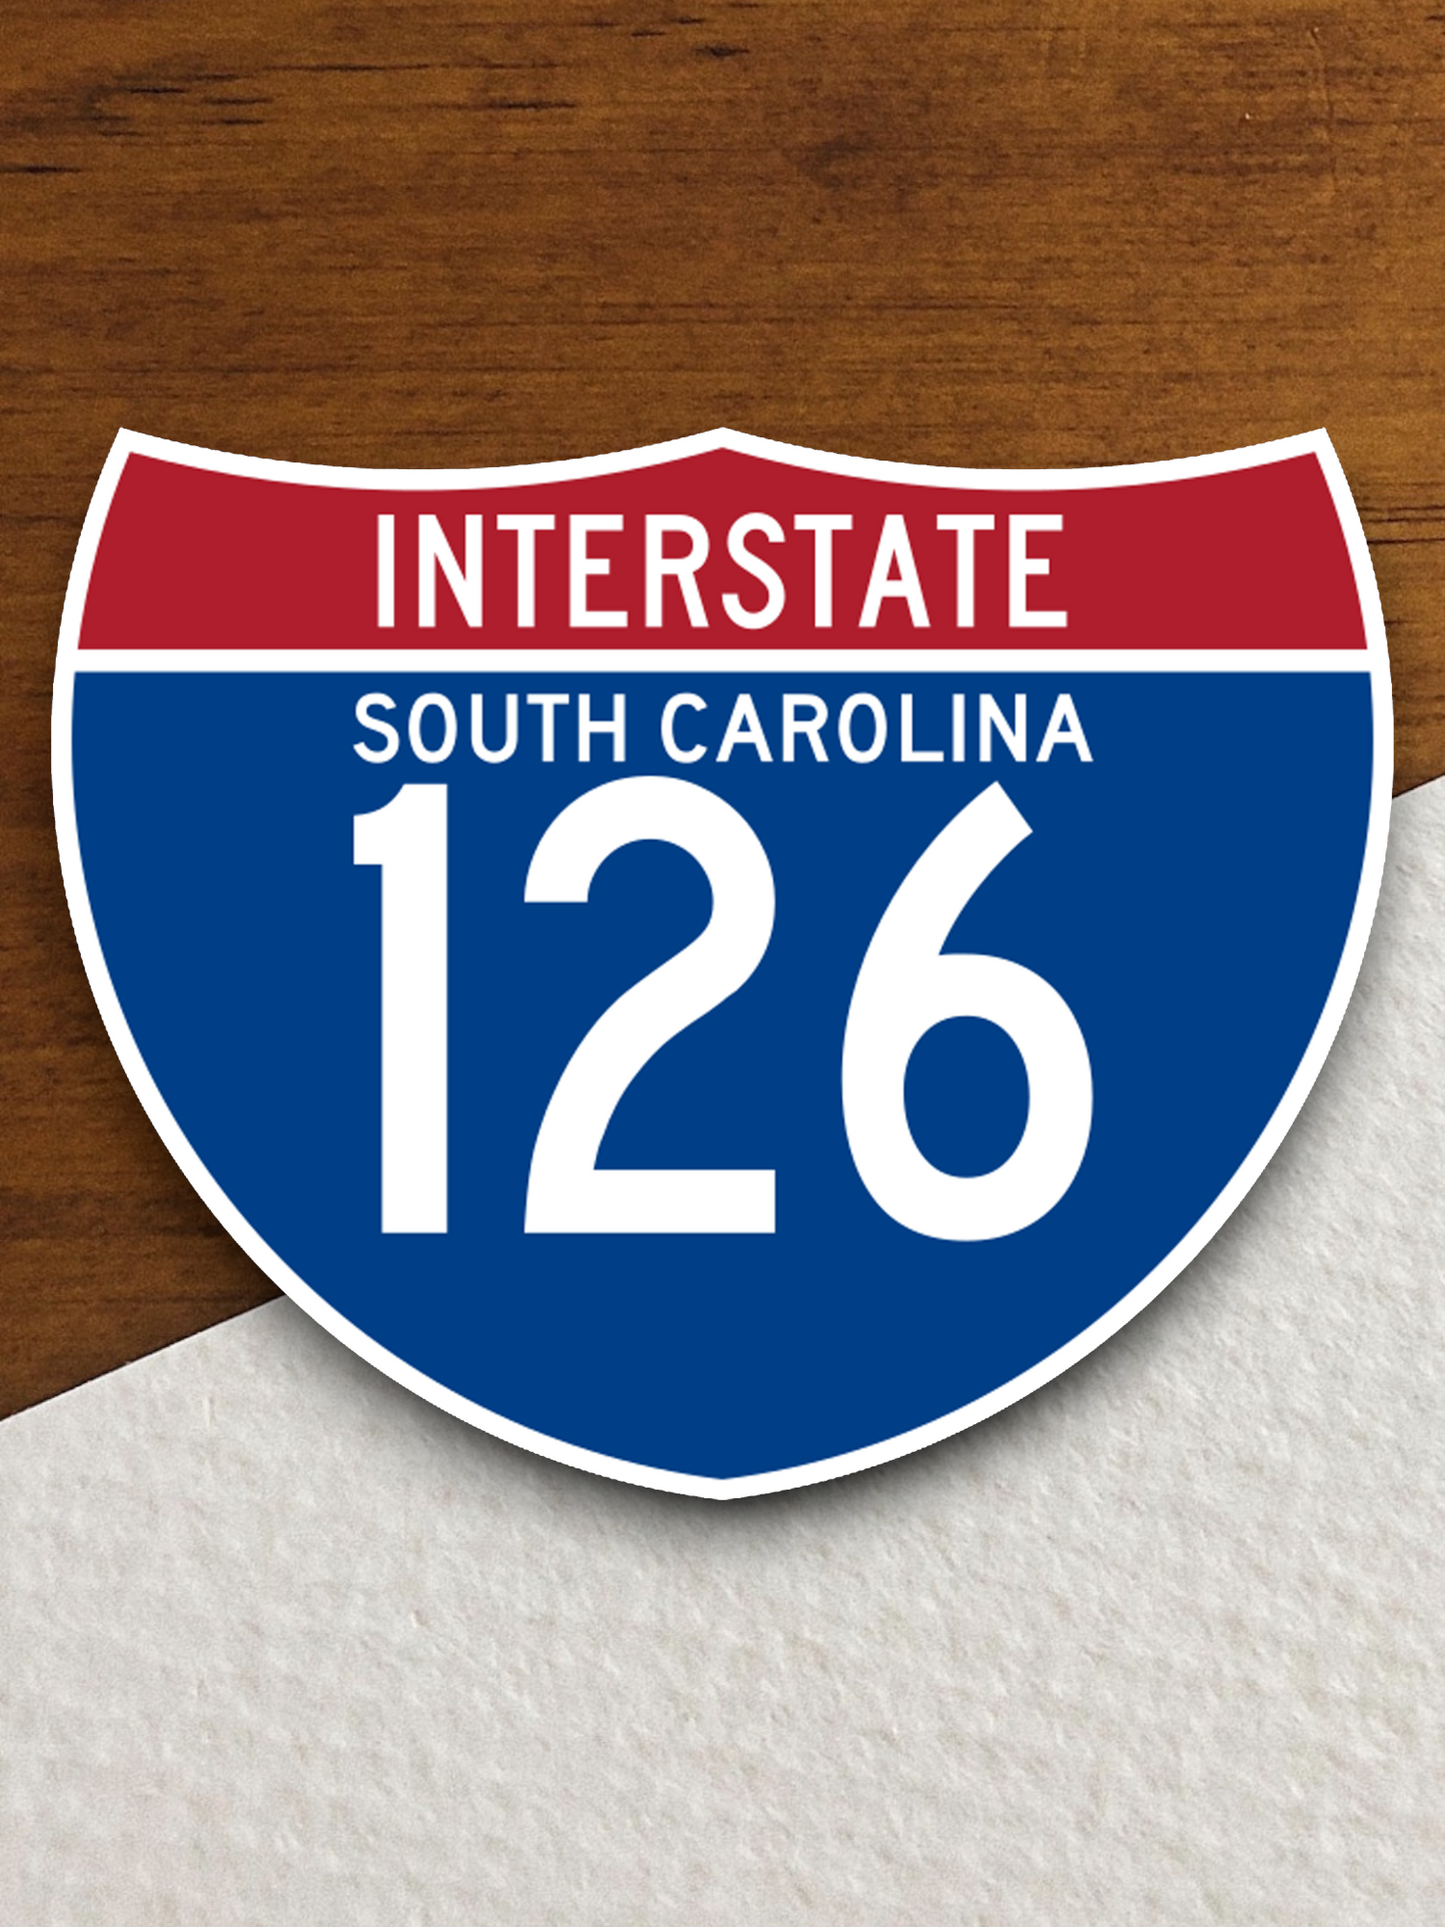 Interstate I-126 South Carolina Sticker